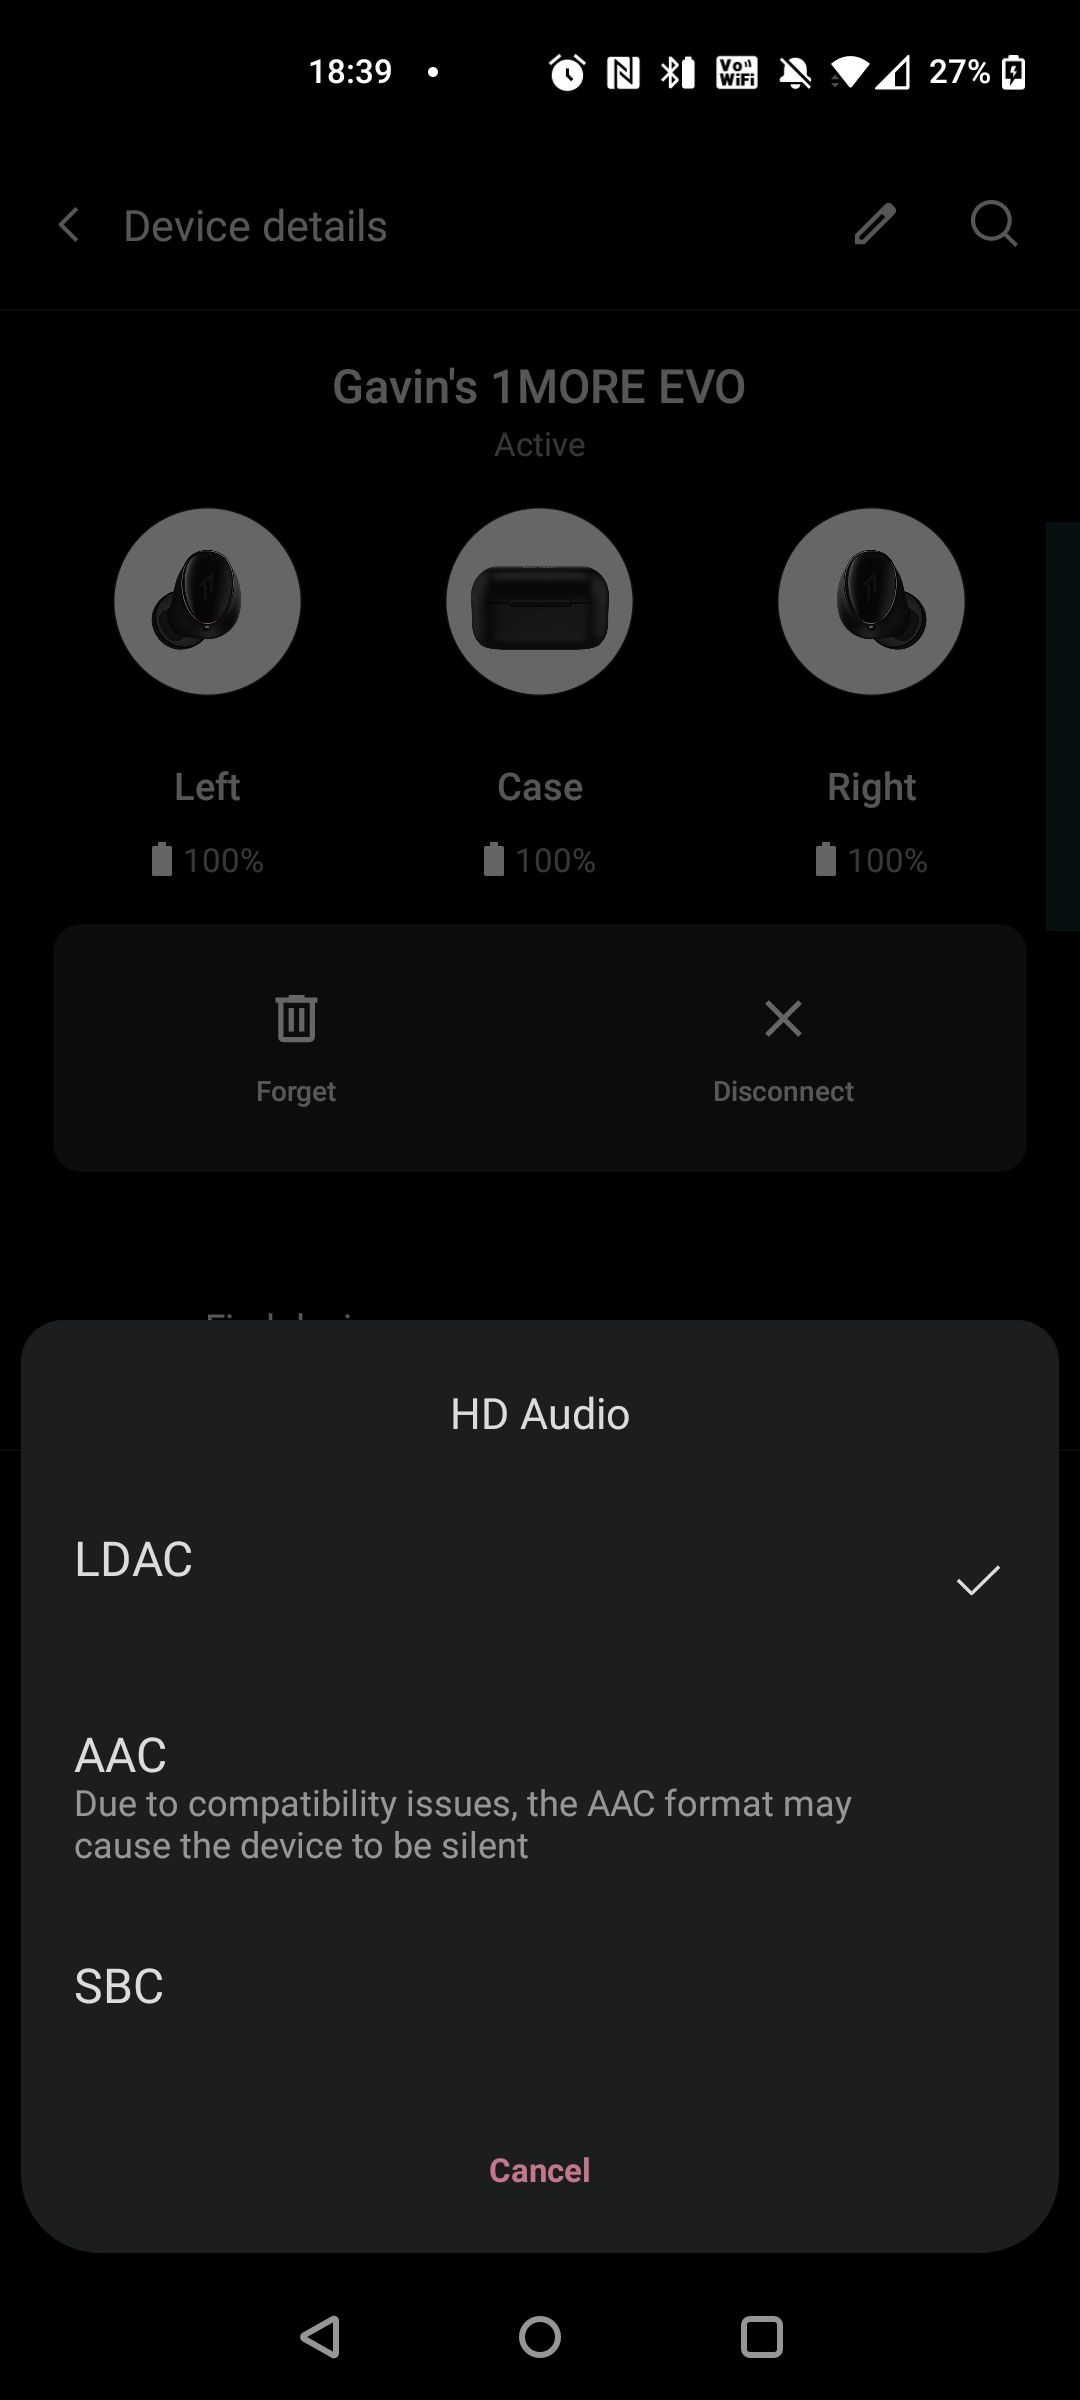 1more evo companion app switch to LDAC codec